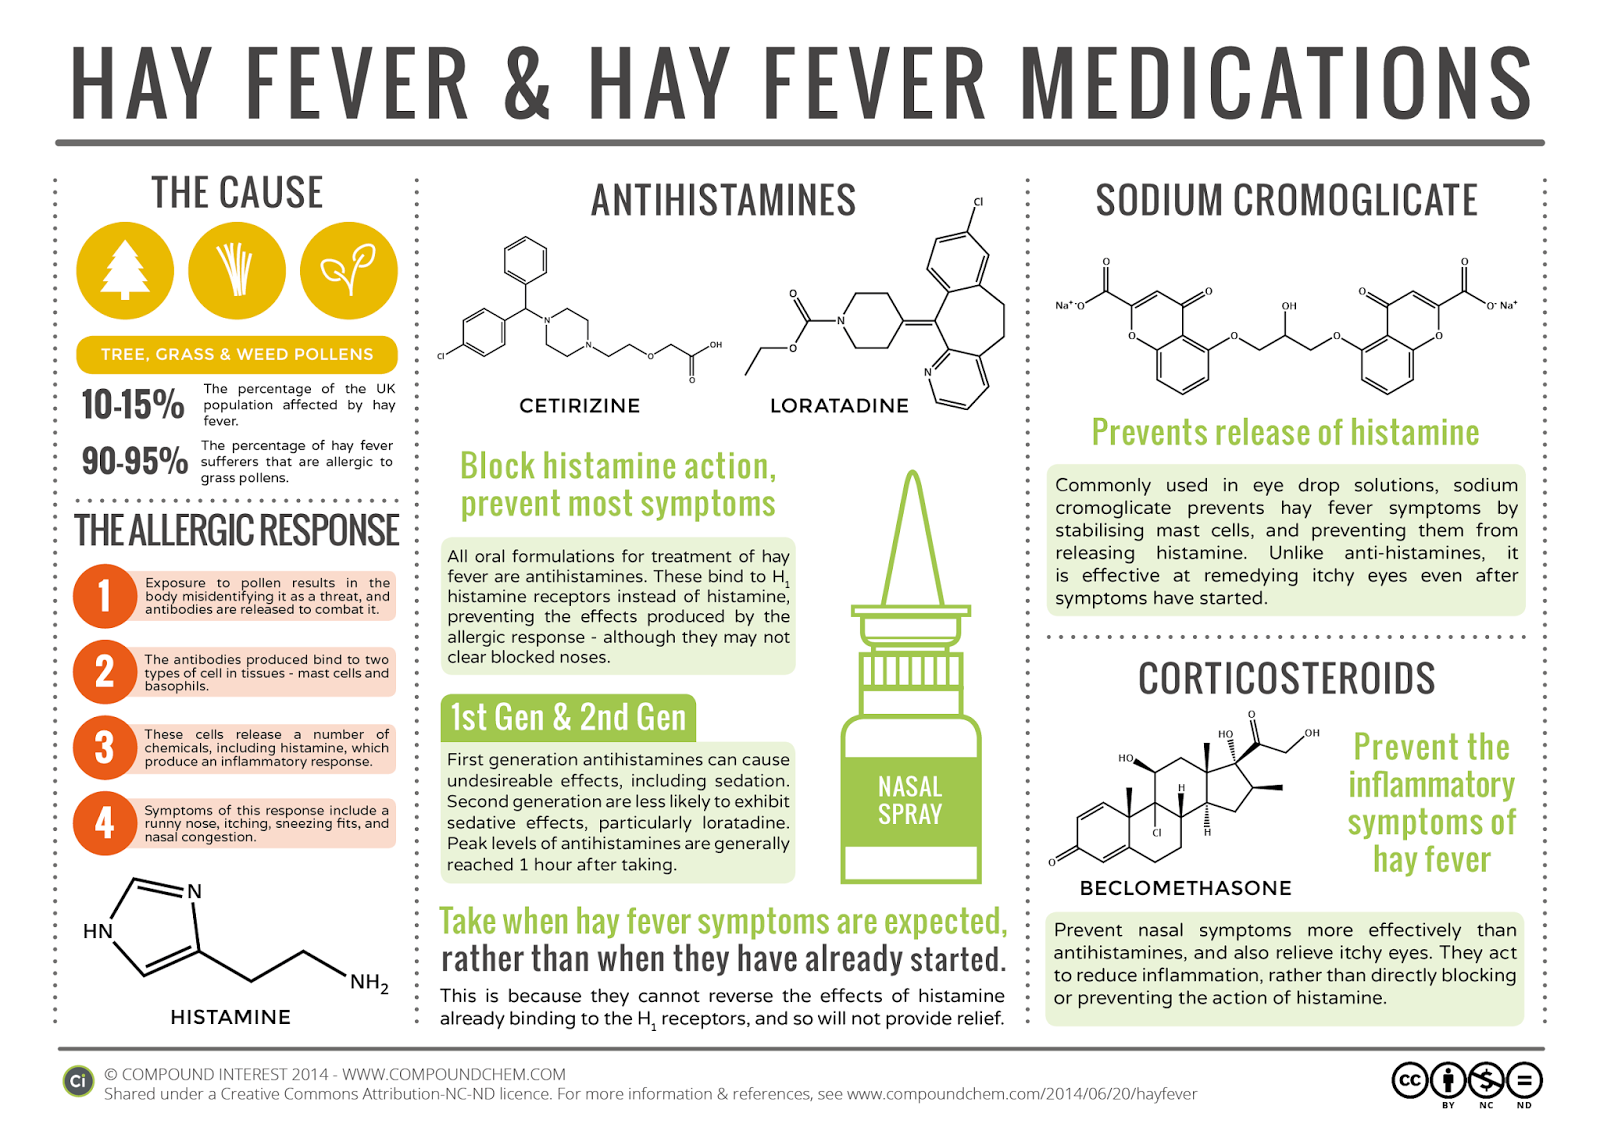 http://www.compoundchem.com/wp-content/uploads/2014/06/Chemistry-Hayfever-Hayfever-Medications.png